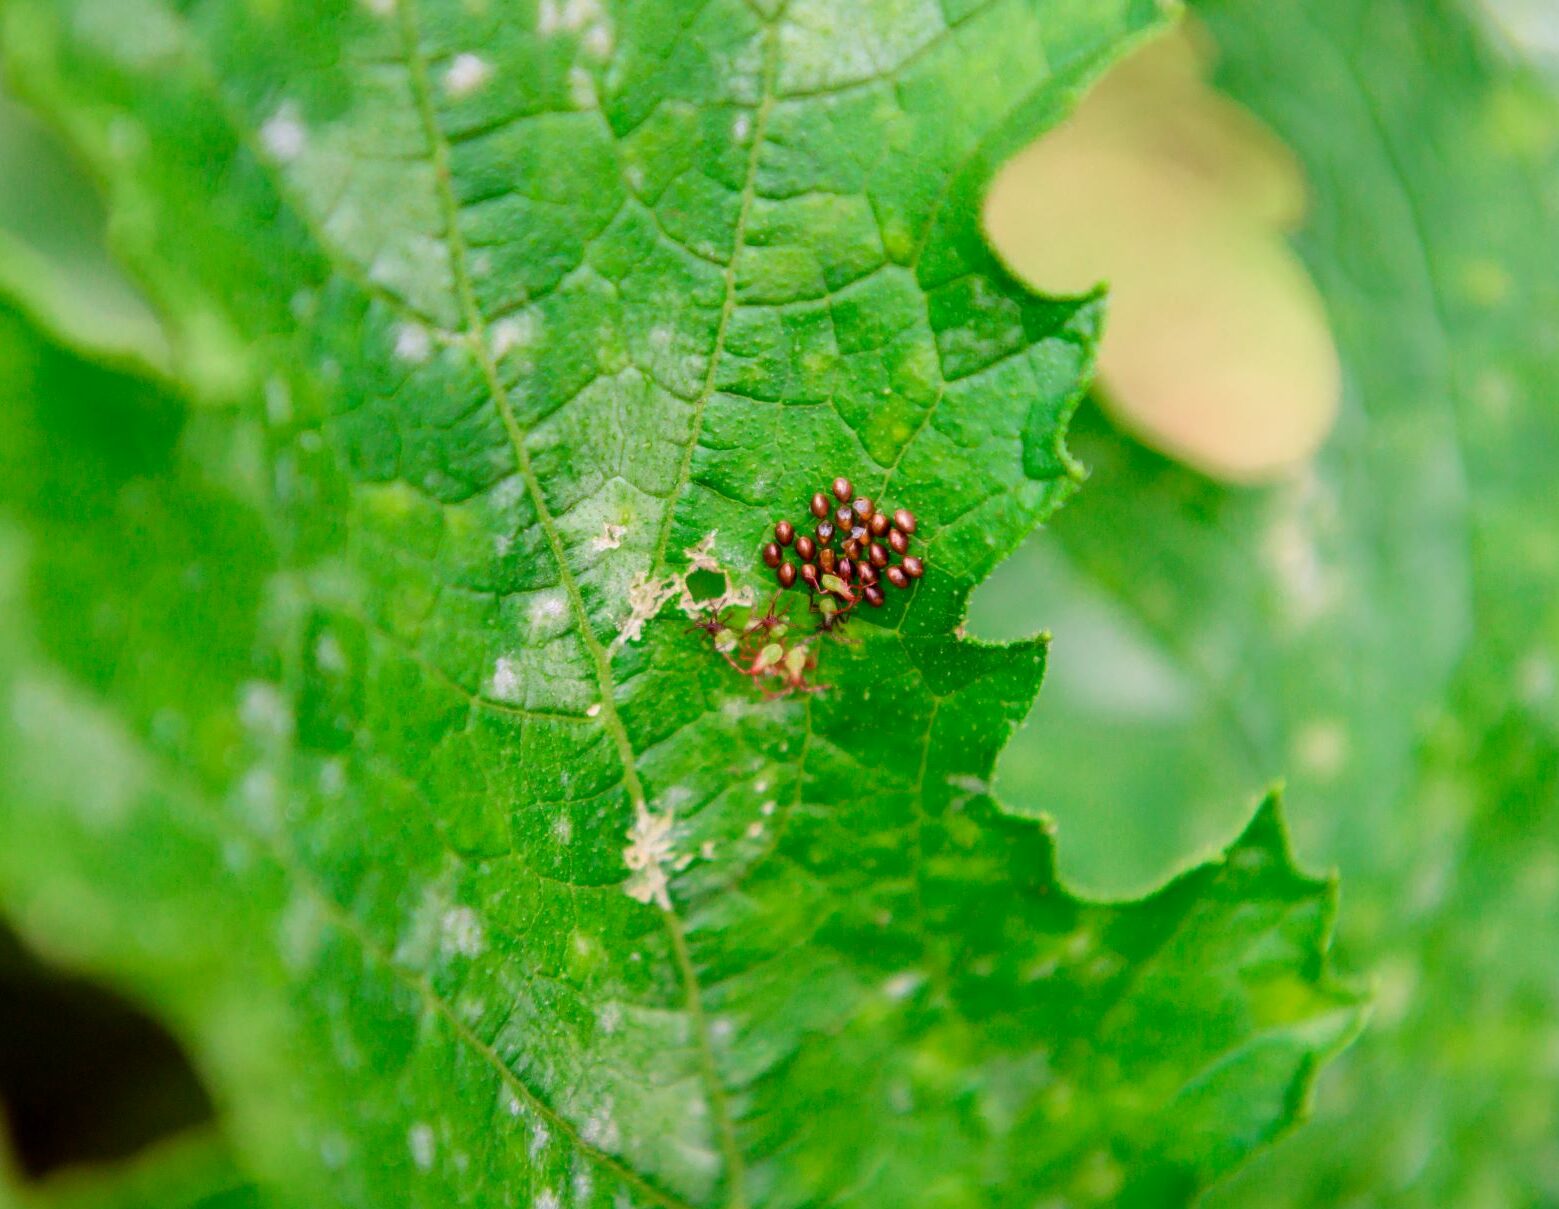 Squash bug nymphs emerging from eggs laid on zucchini leaf. Photo: Krista Smith